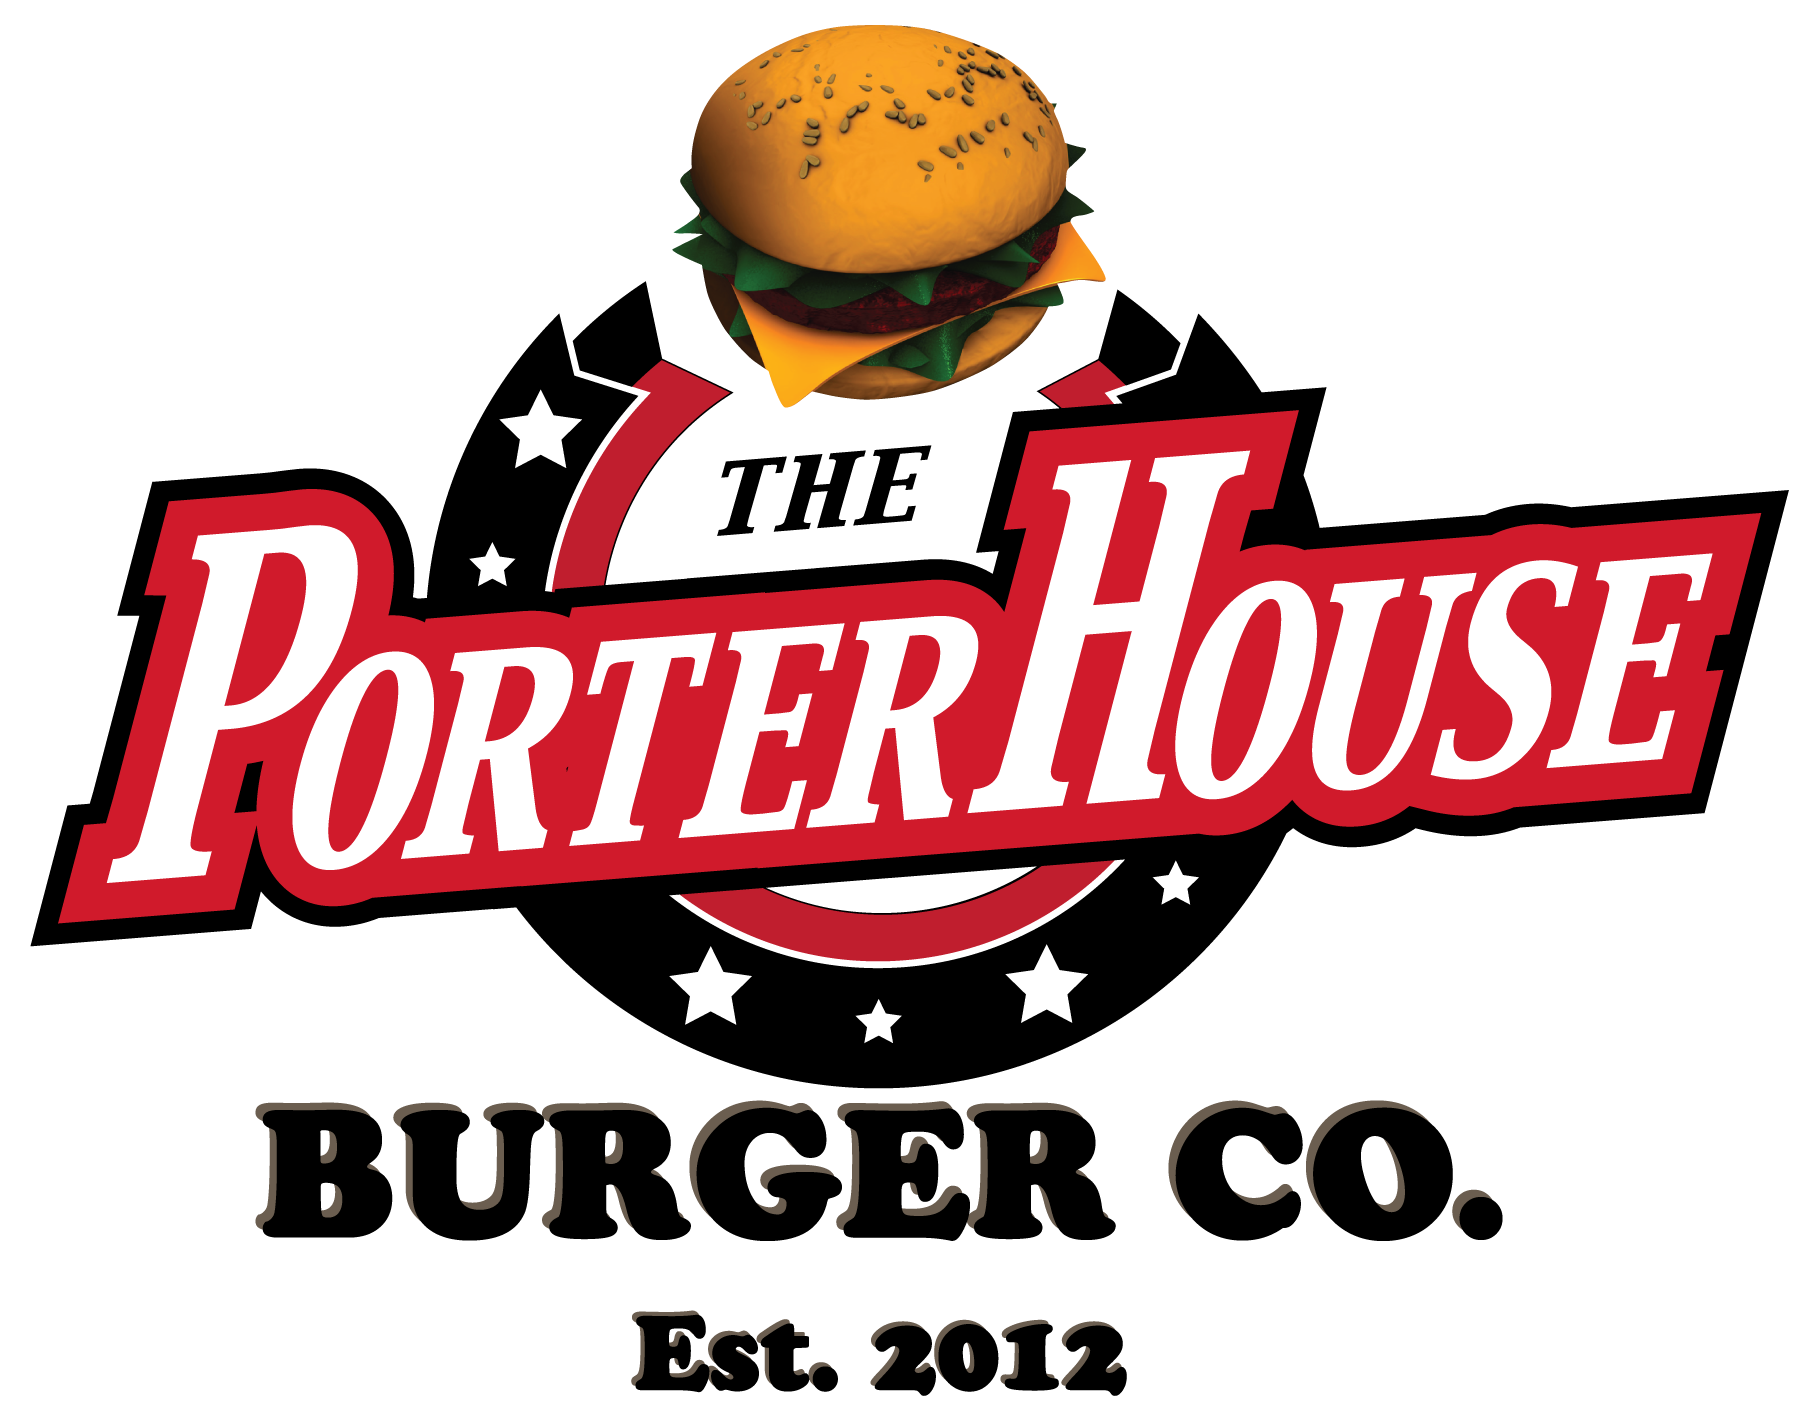 party logo of a burger food truck logos designs for a burger